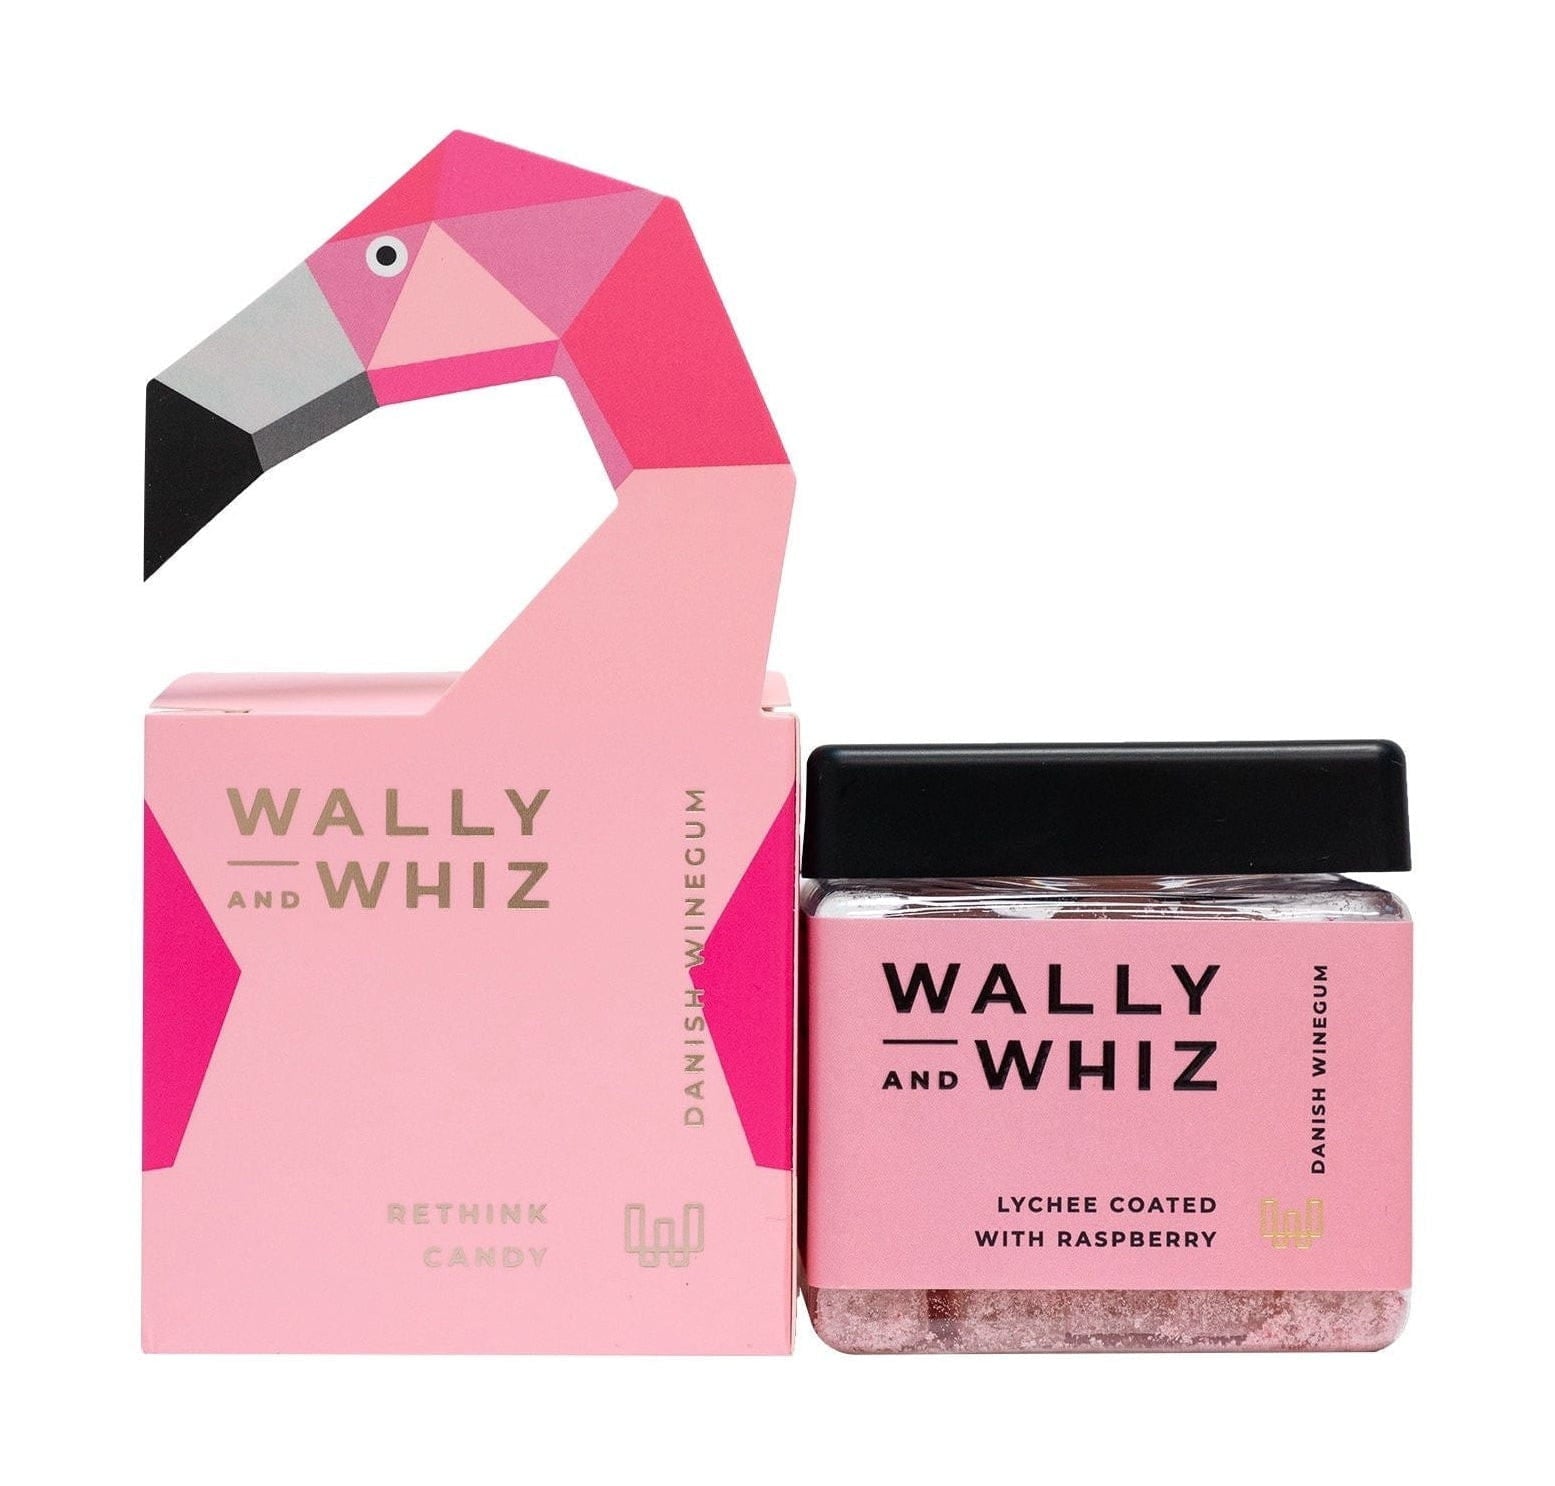 Wally And Whiz Wijngomkubus, flamingo roze lychee met frambozen, 140 g